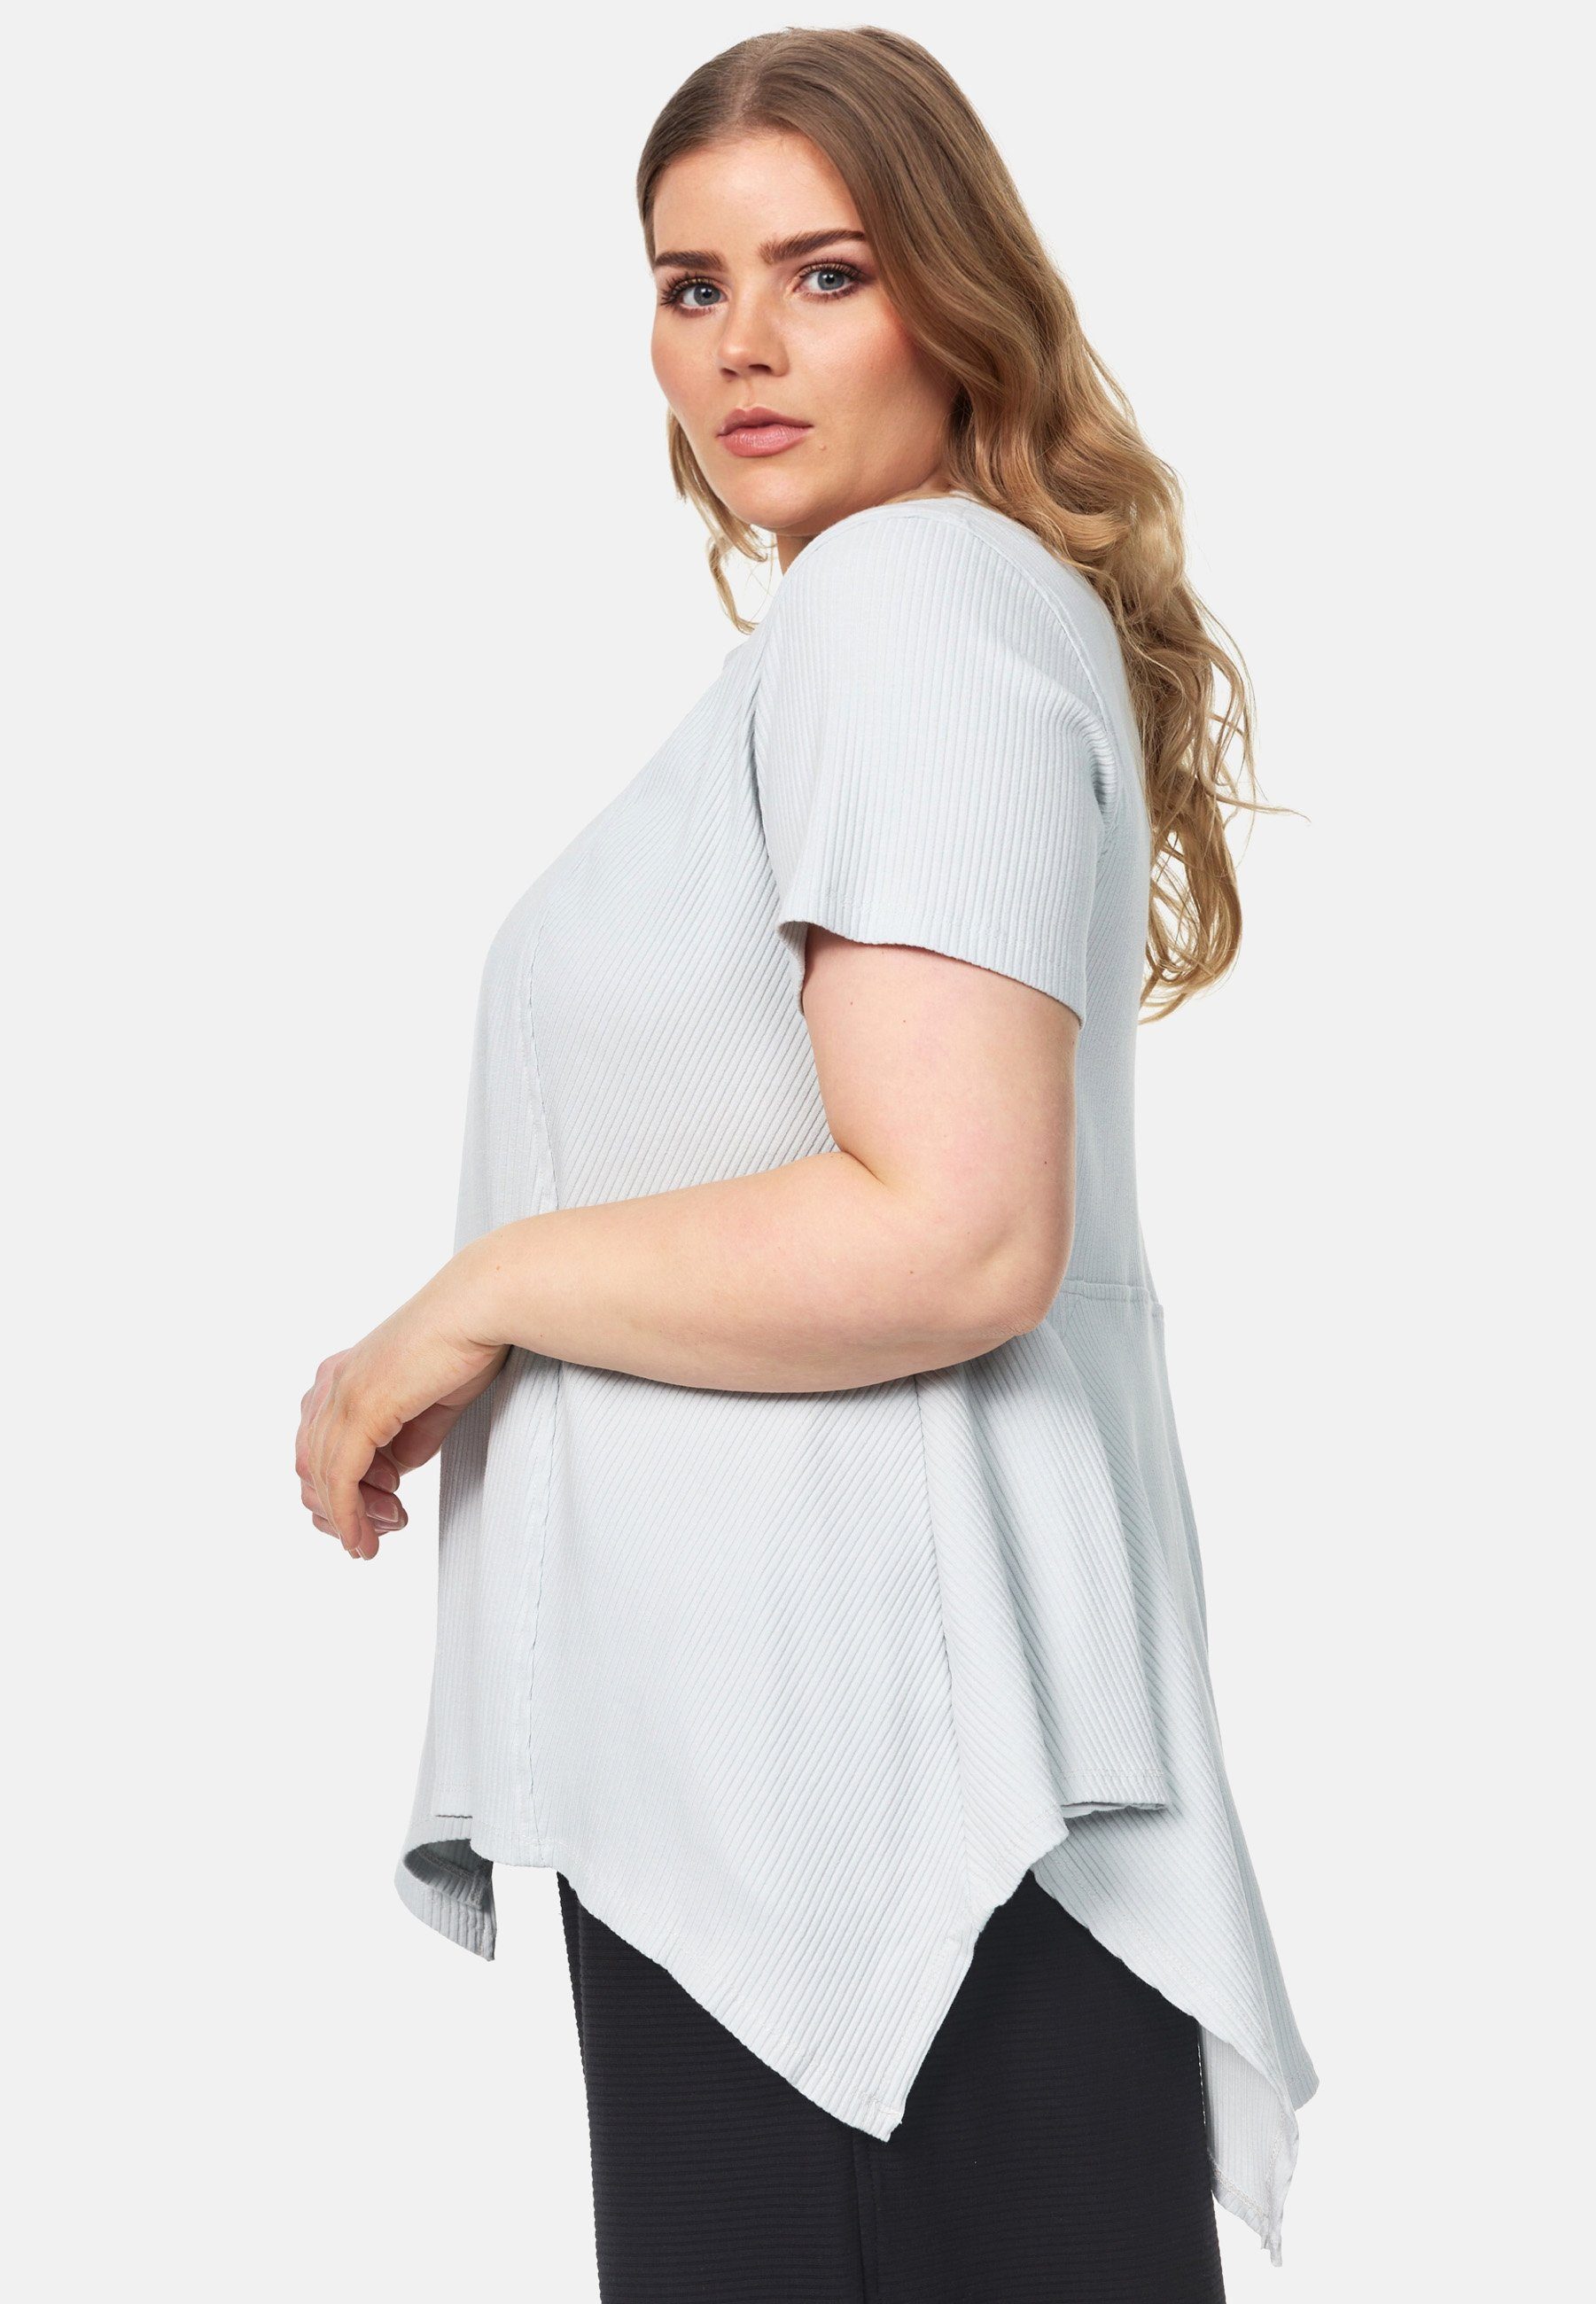 Kekoo Tunikashirt Shirt Tunika 'Adele' Grau asymmetrischem A-Linie mit Saum